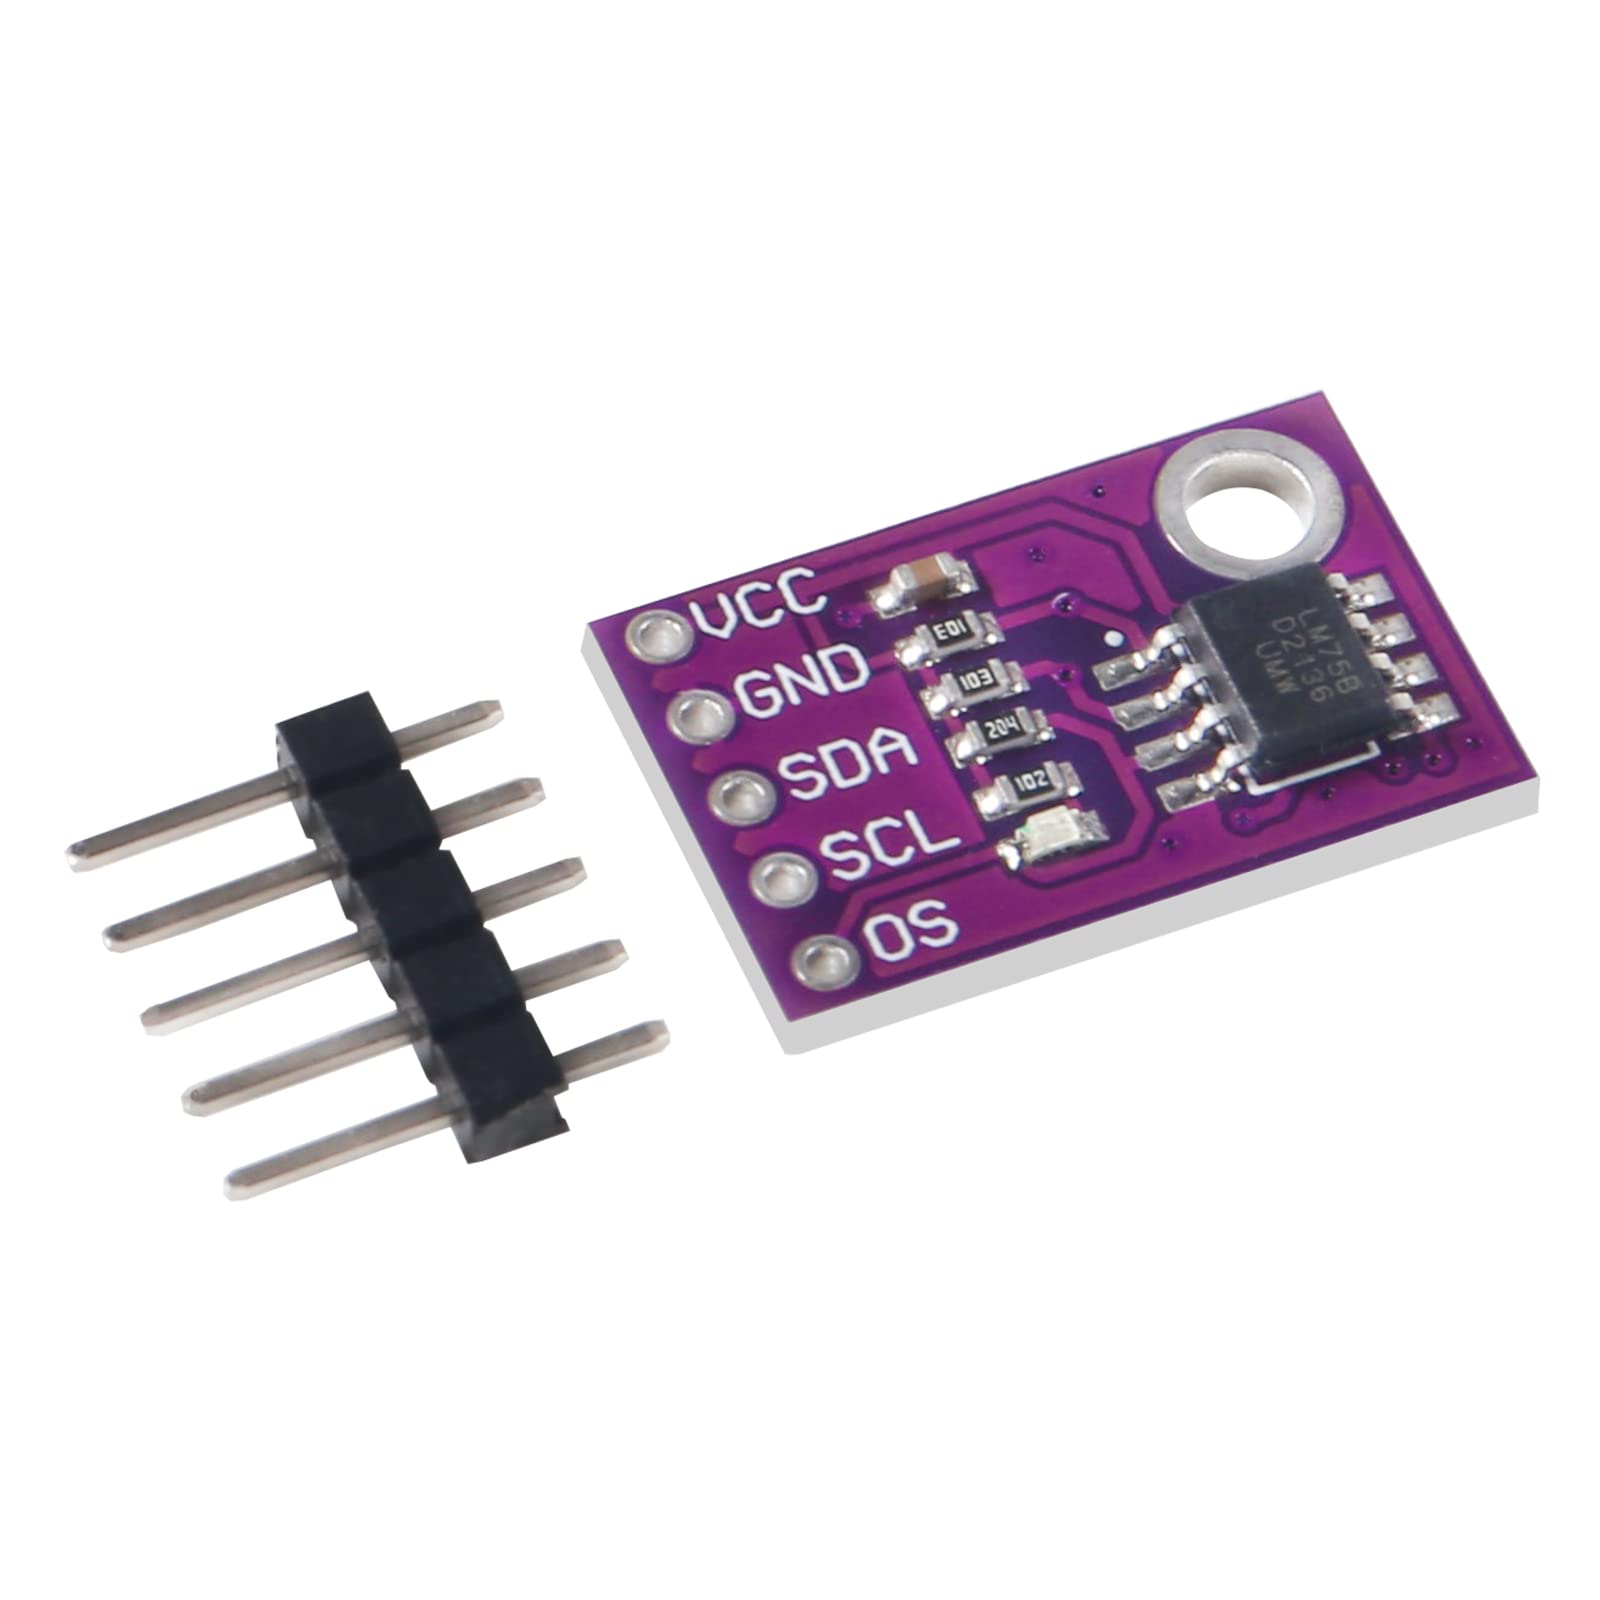 QCCAN 5PCS LM75 LM75A Temperature Sensor High Speed I2C IIC Interface High Precision Development Board Module